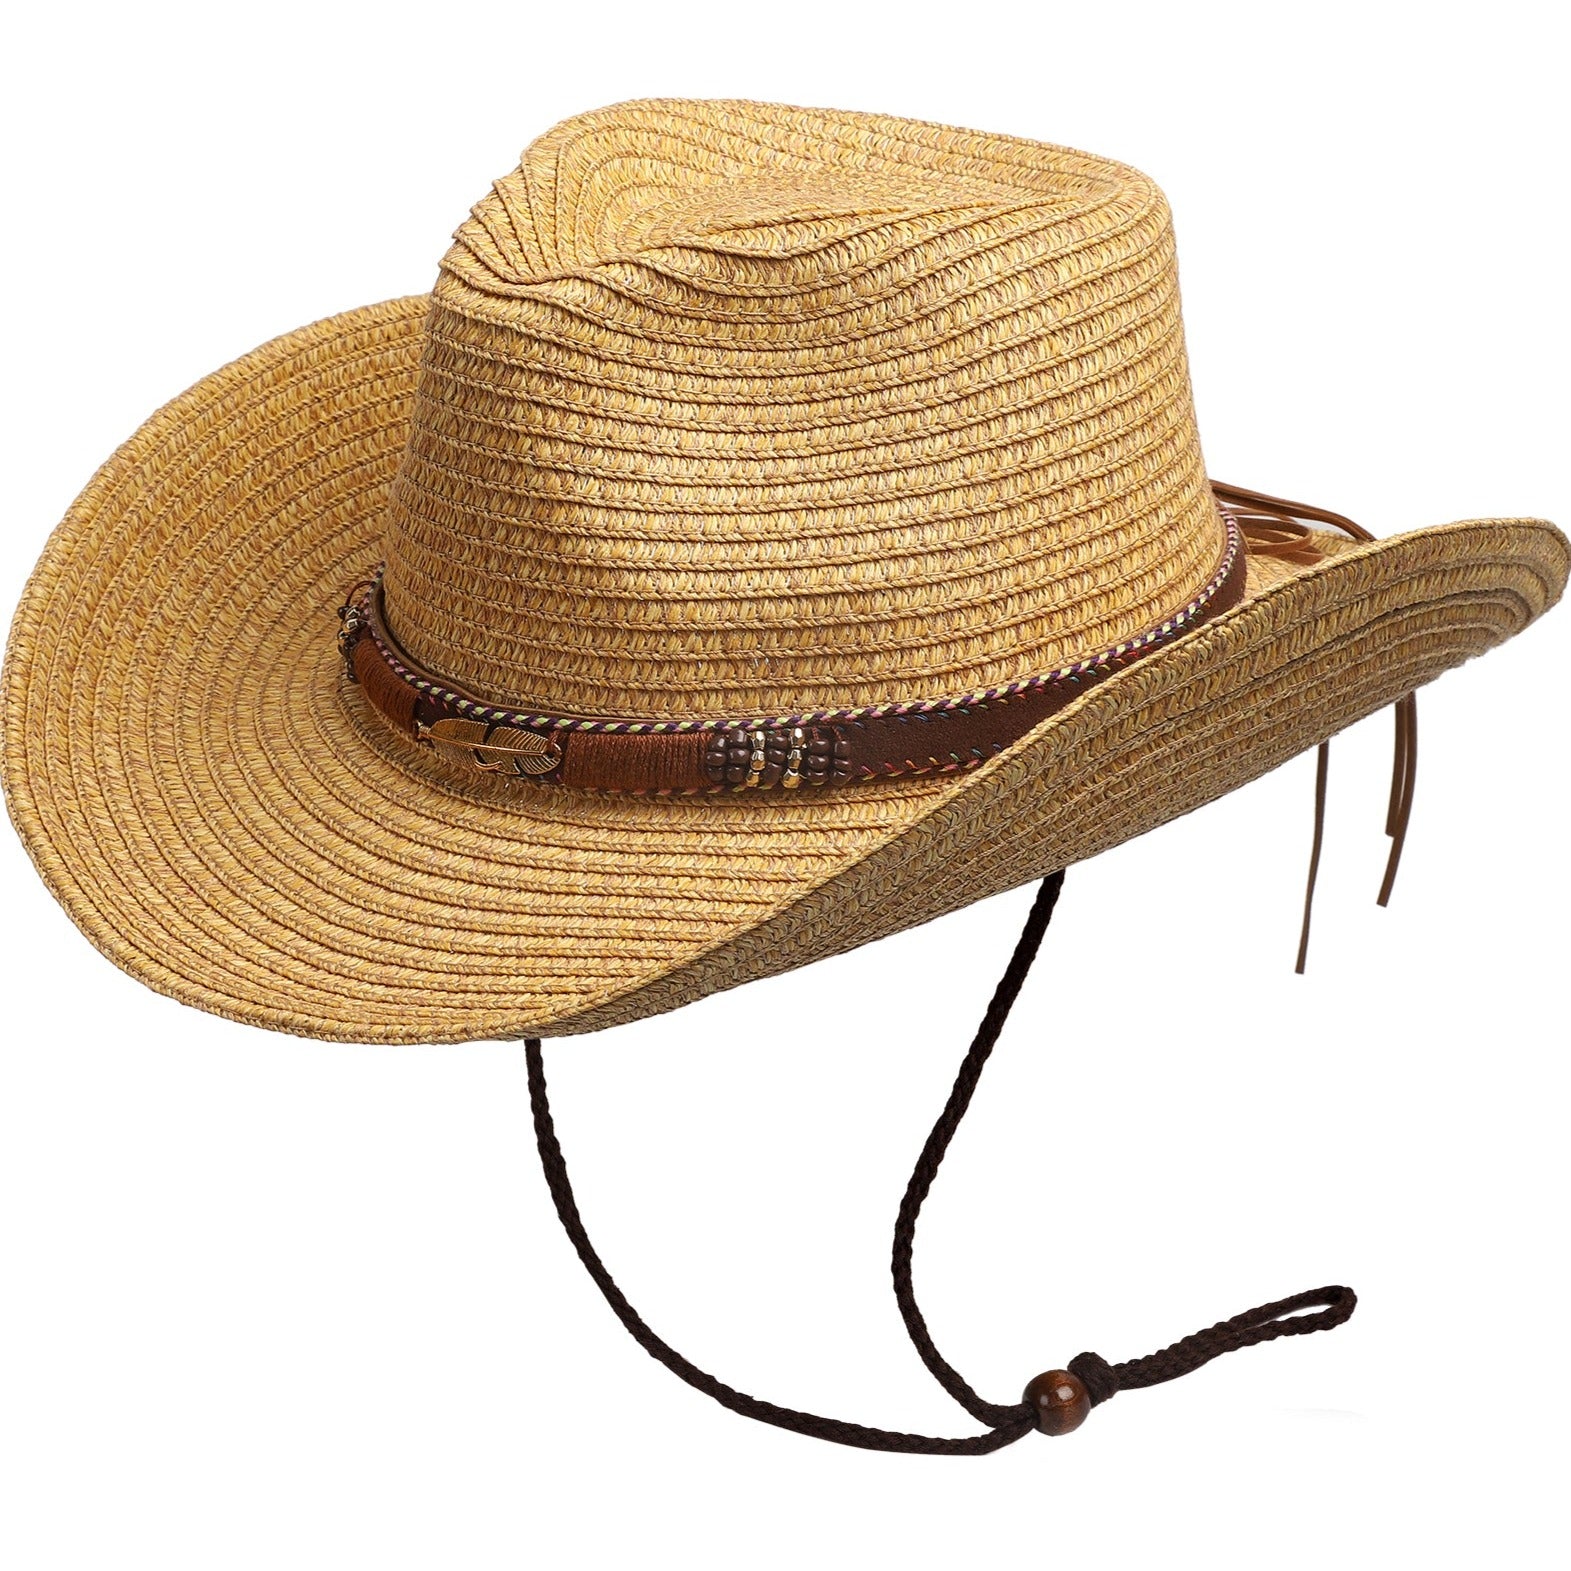 Straw Sun Hat Cowboy Style